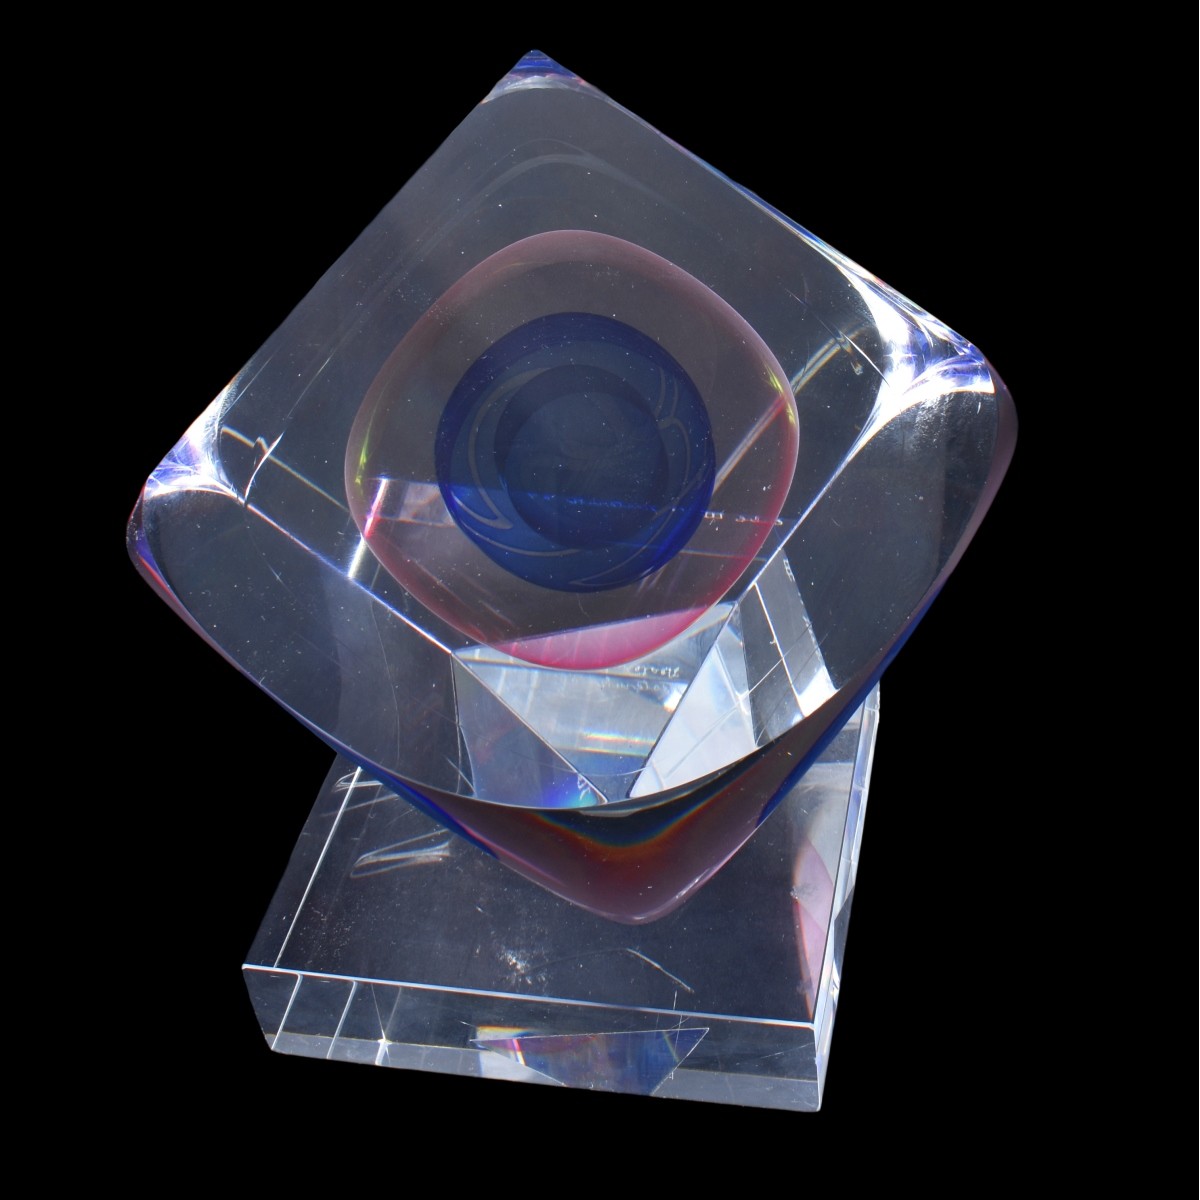 Nesteruk (born 1941) Art Glass Sculpture